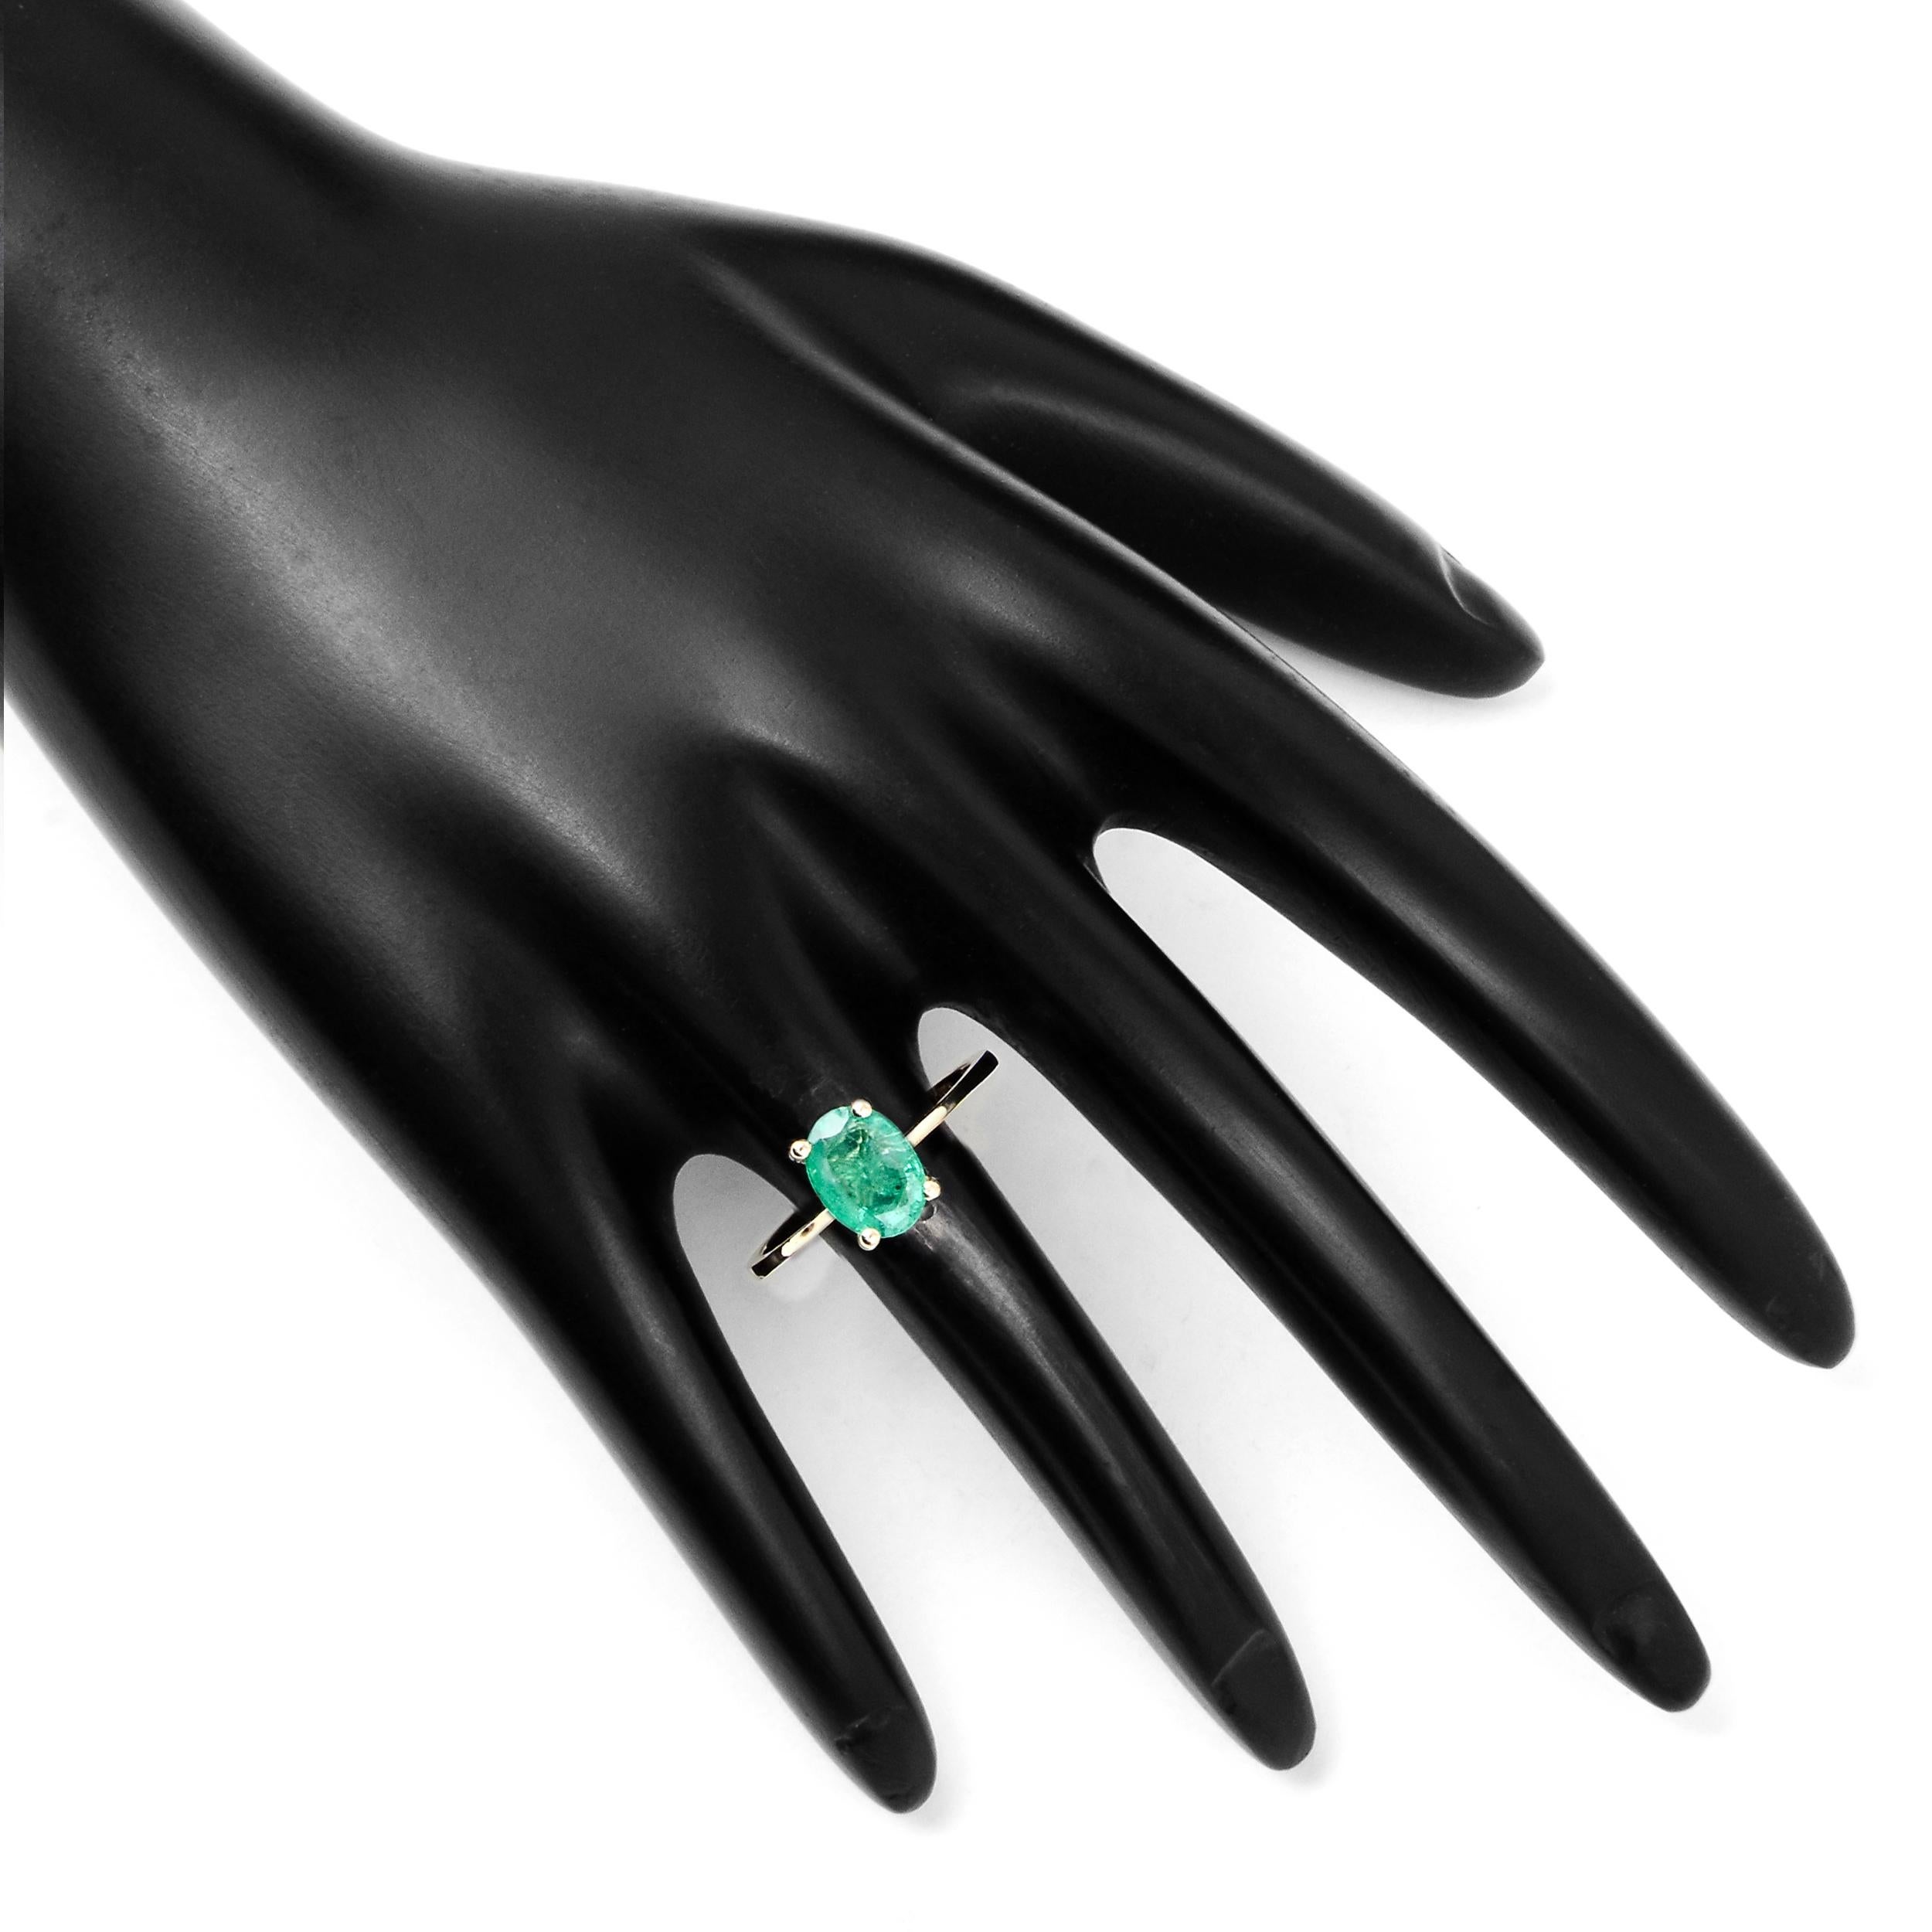 Elegant 14K 1.33ct Emerald Cocktail Ring, Size 7 - Timeless & Elegant Jewelry 3